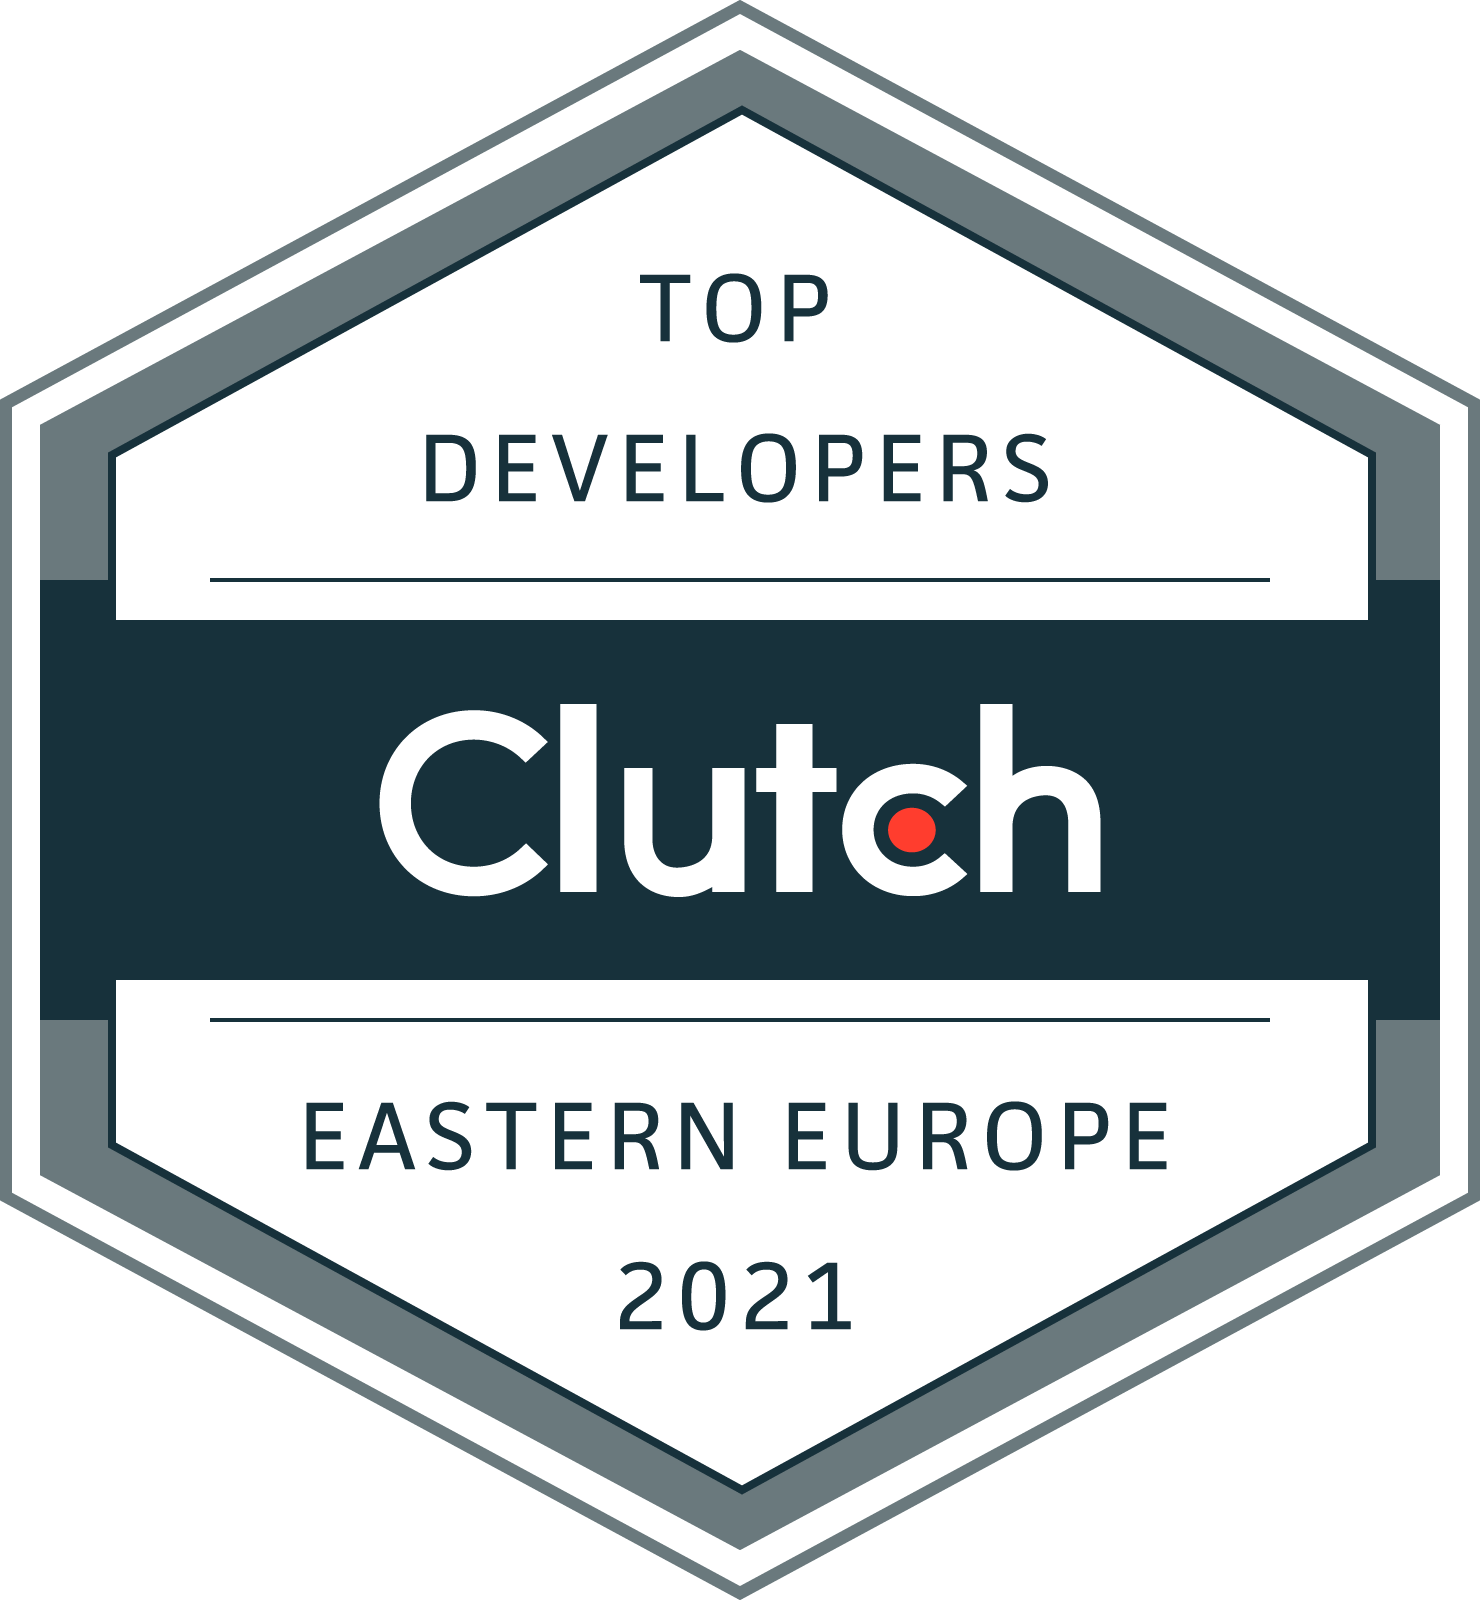 Clutch, Top developers, Eastern Europe 2021